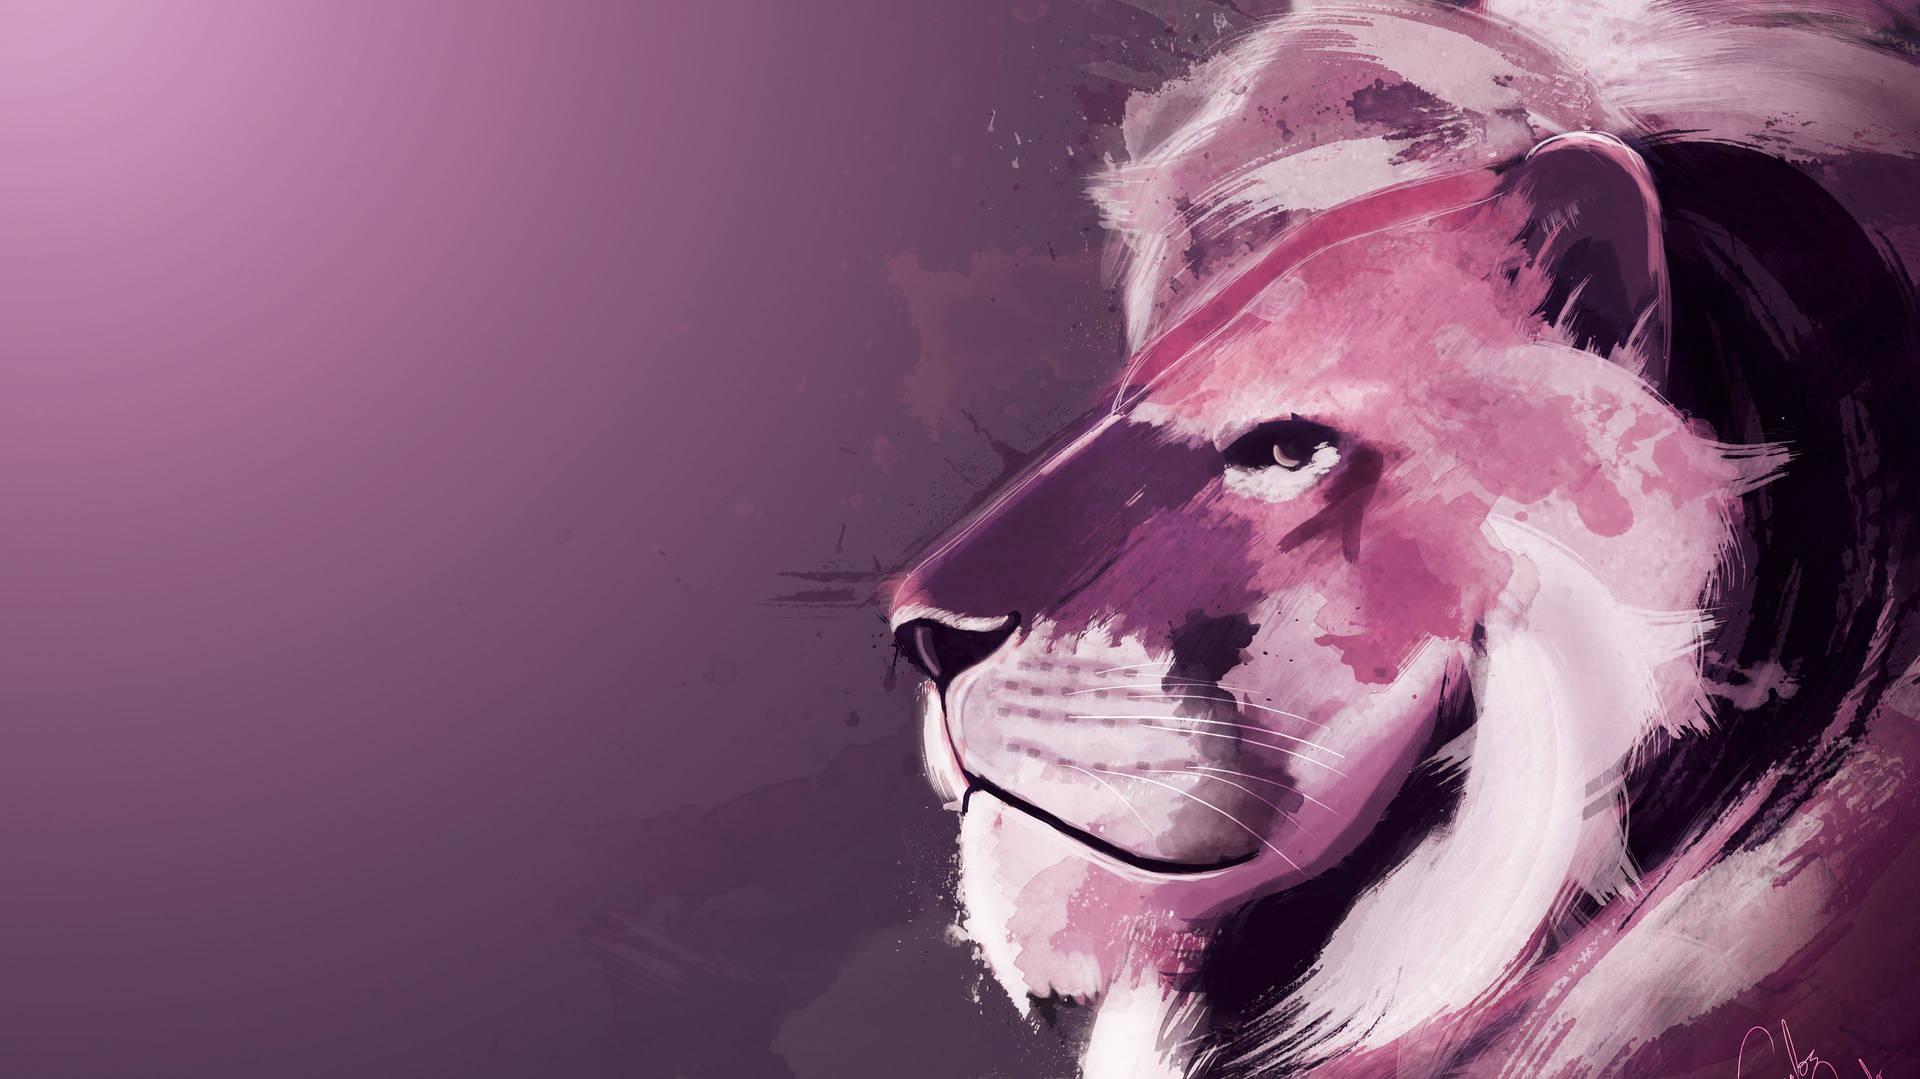 Download 4K Ultra HD Lions Pink Wallpaper